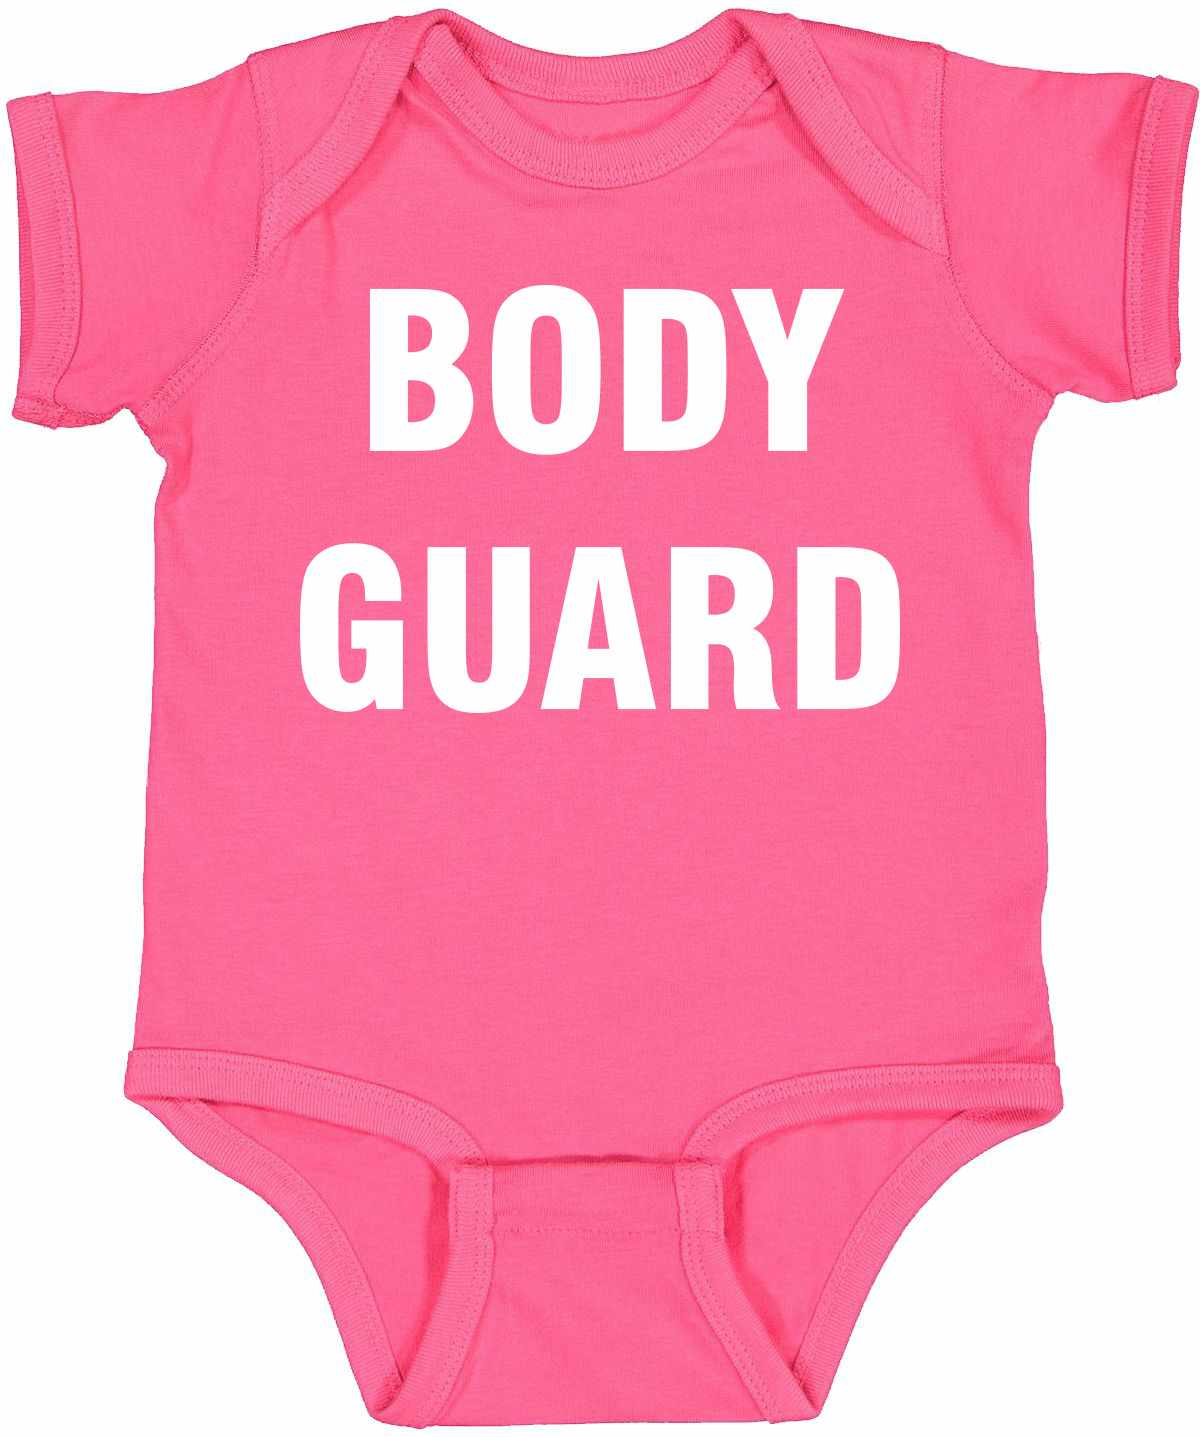 BODY GUARD Infant BodySuit (#234-10)